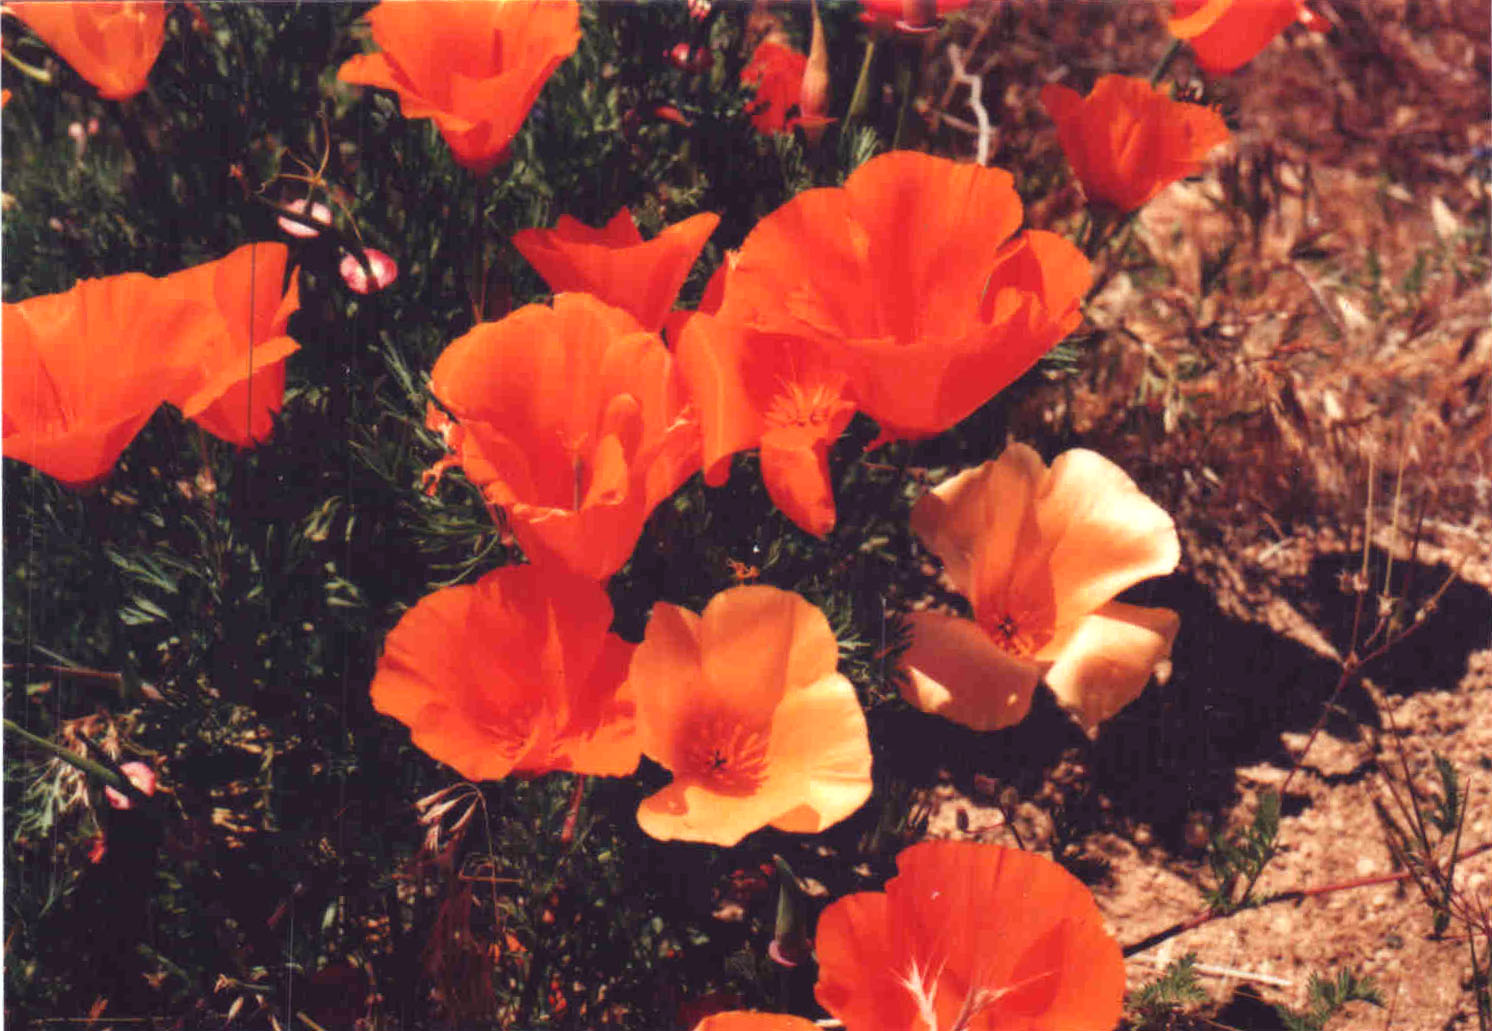 California poppies